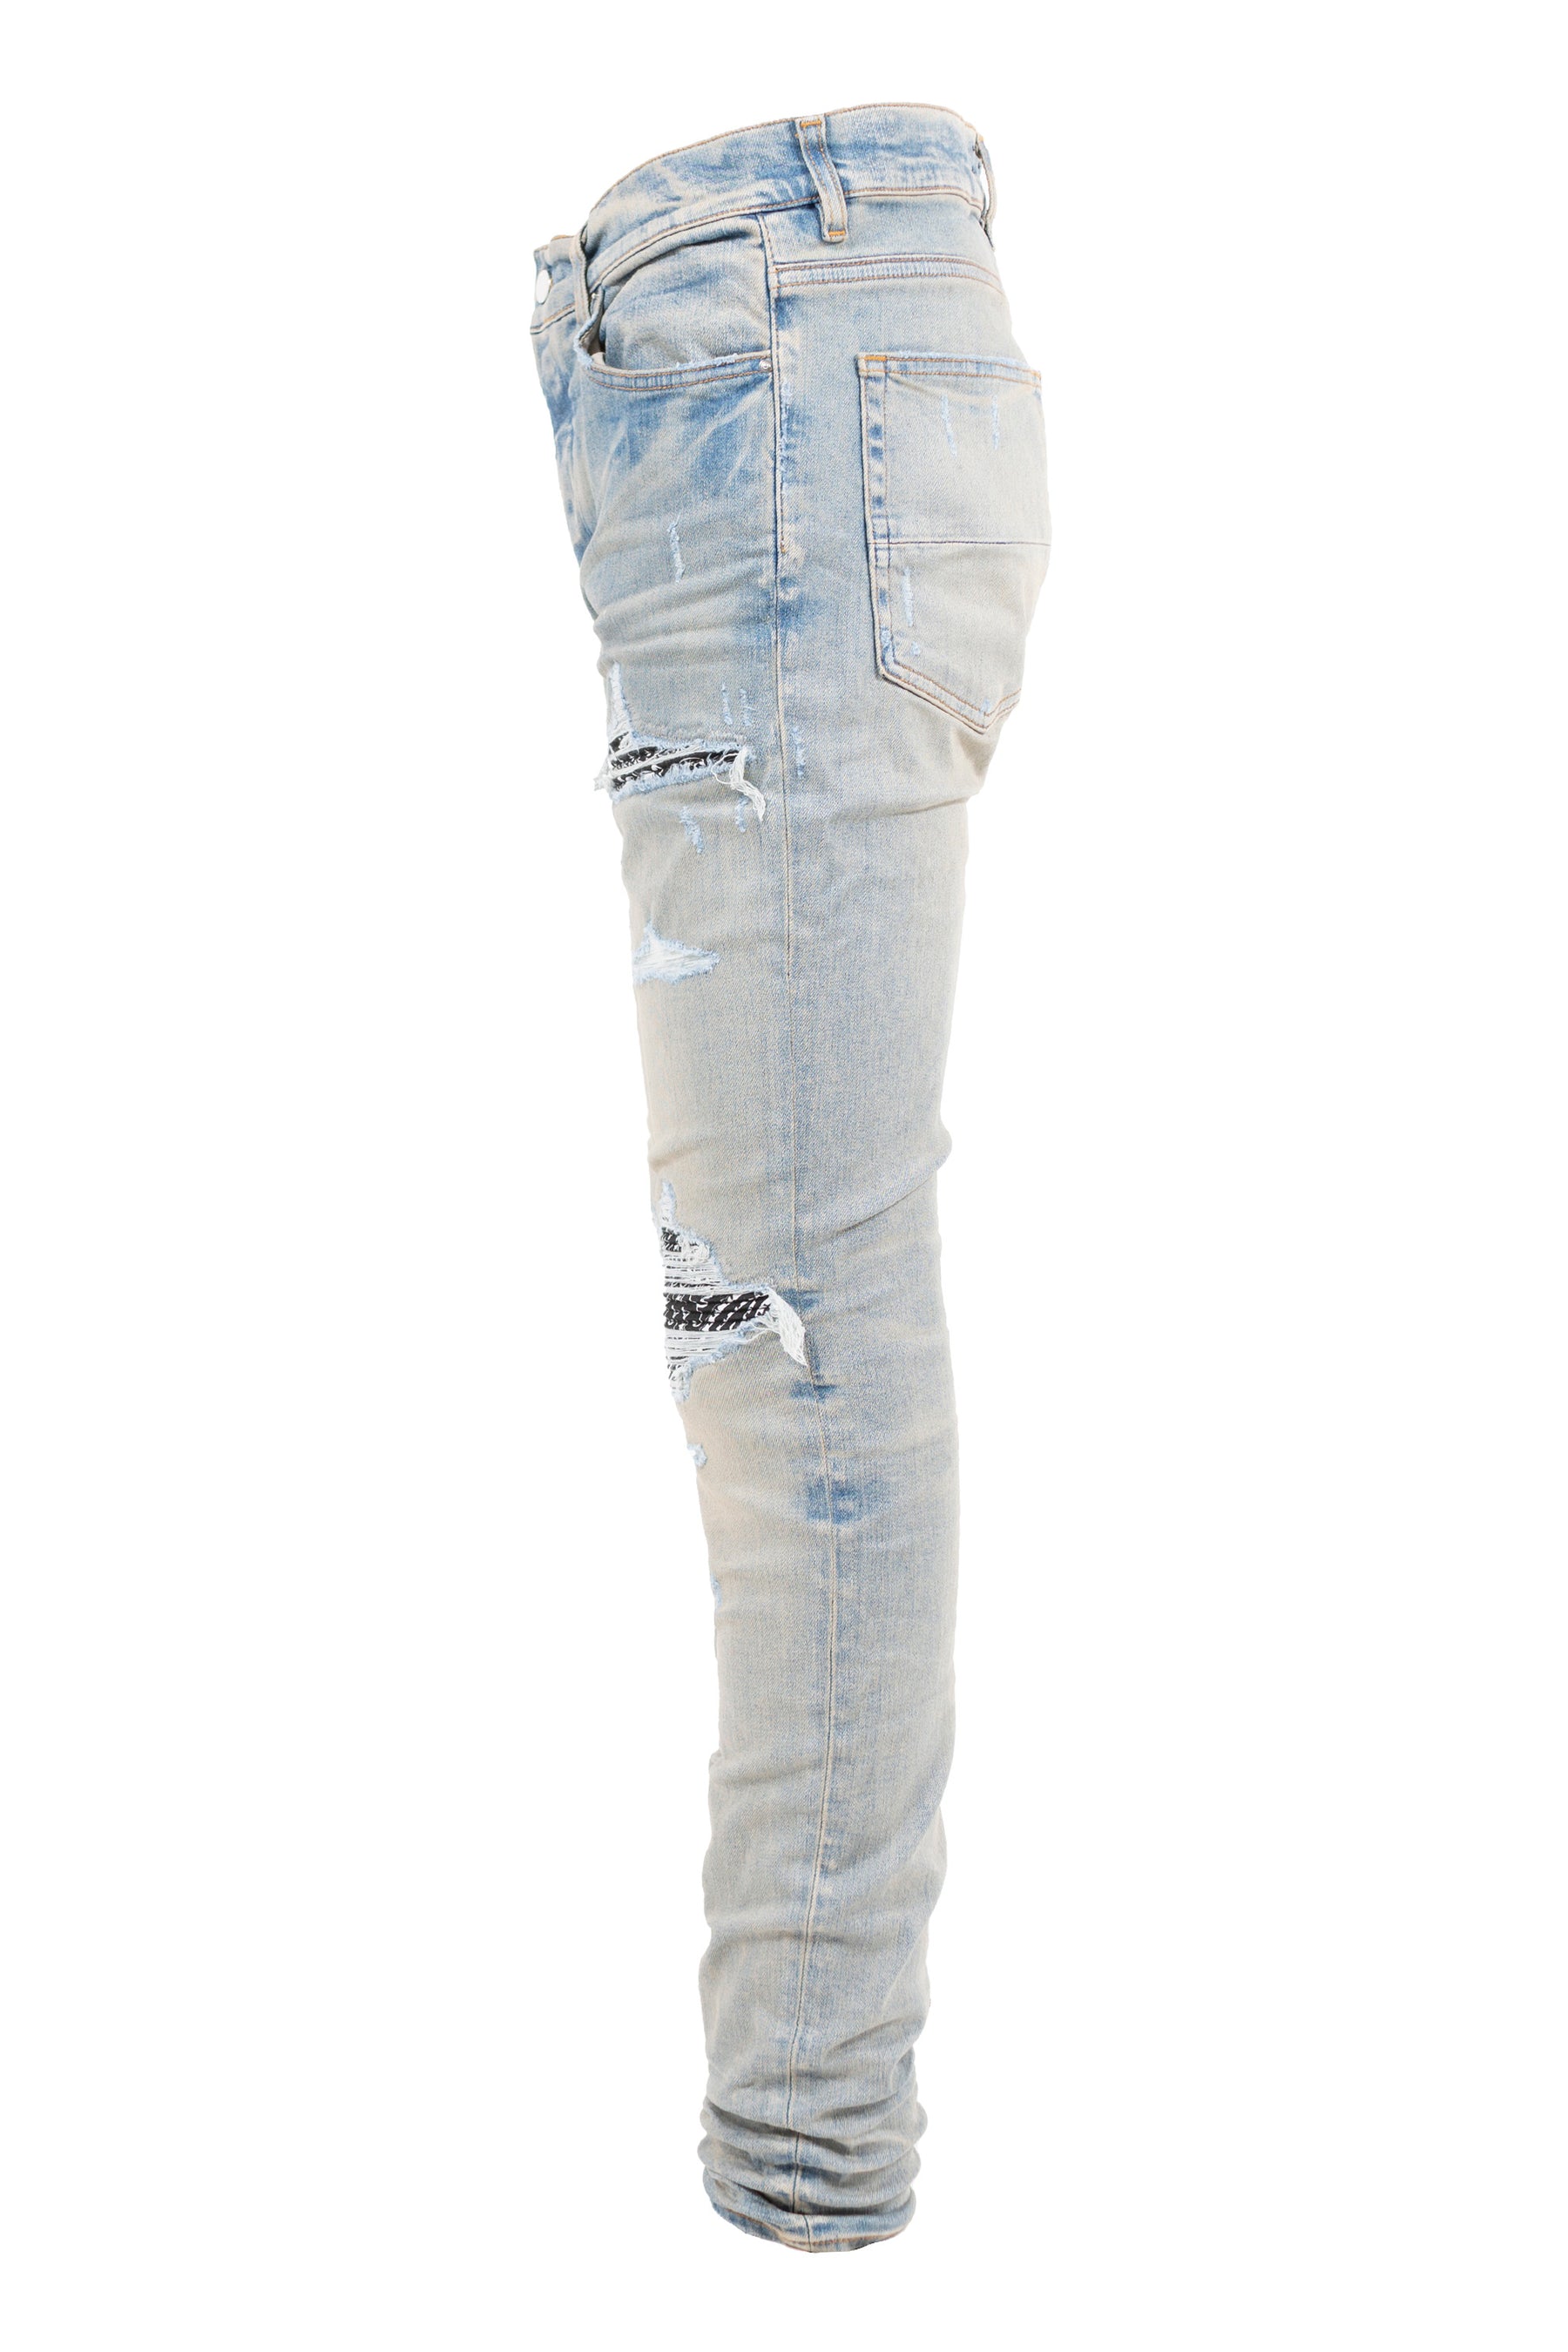 Amiri Jacquard Carpenter Jeans 'Aqua